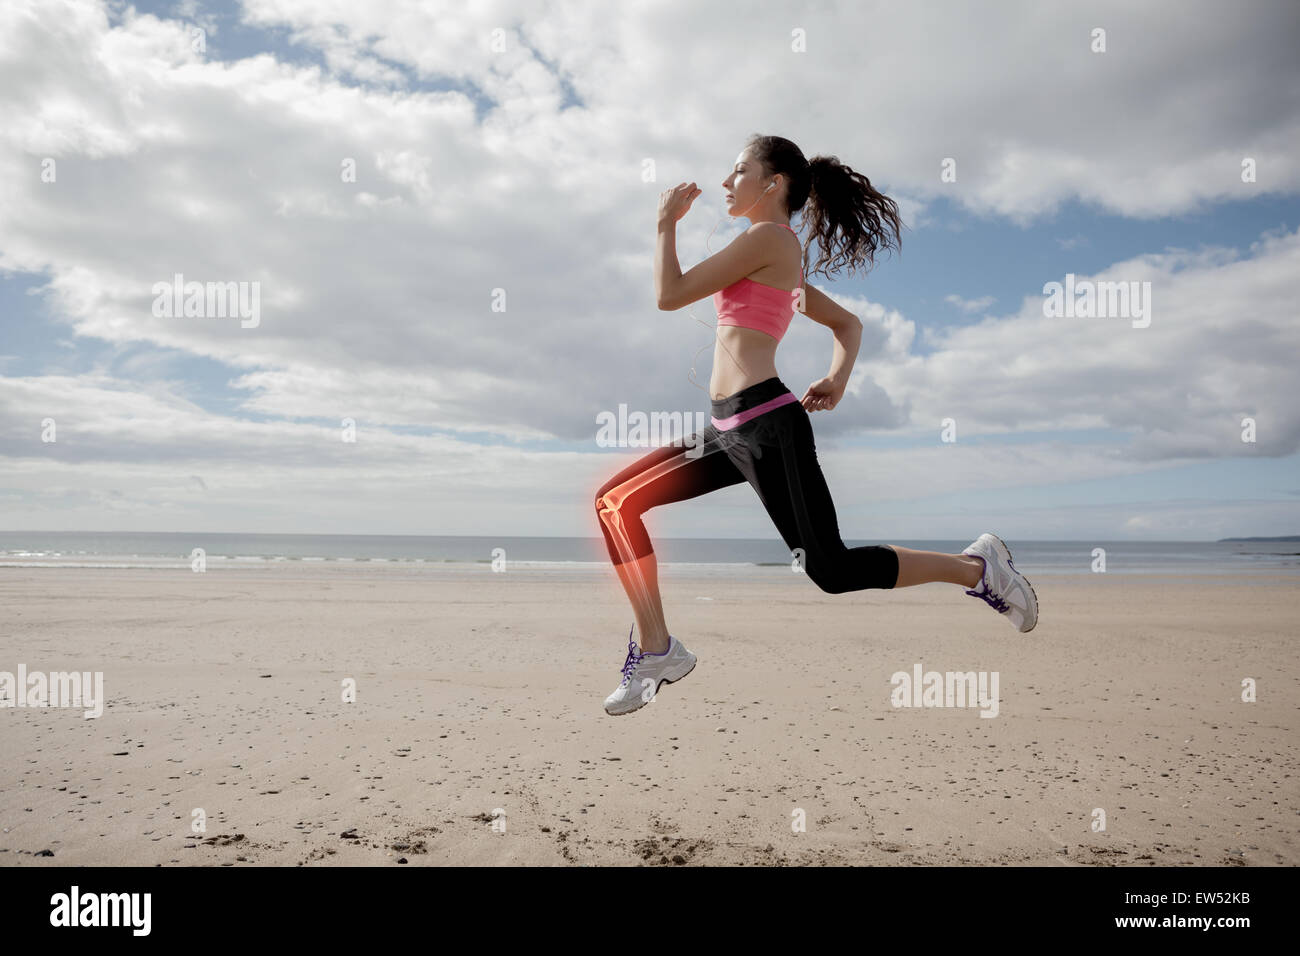 Highlighted leg bones of jogging woman on beach Stock Photo